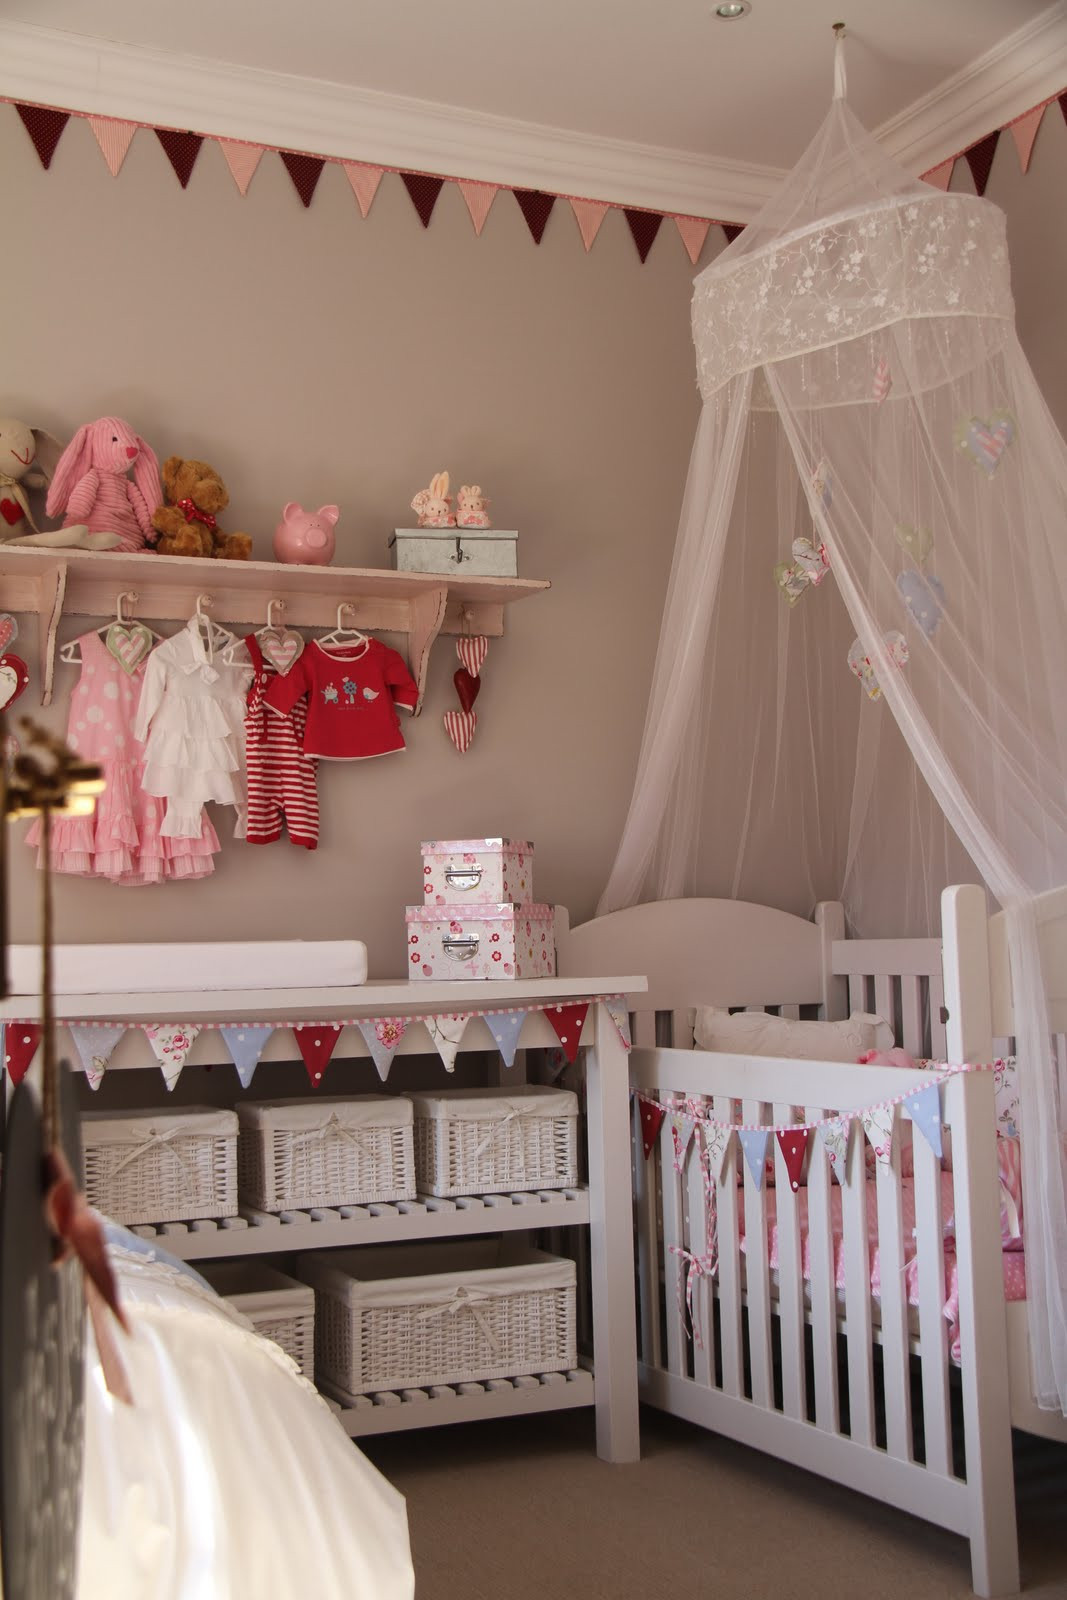 Diy Baby Girl Room Decorations
 I SPY PRETTY Our Baby Girl Mia s DIY Nursery